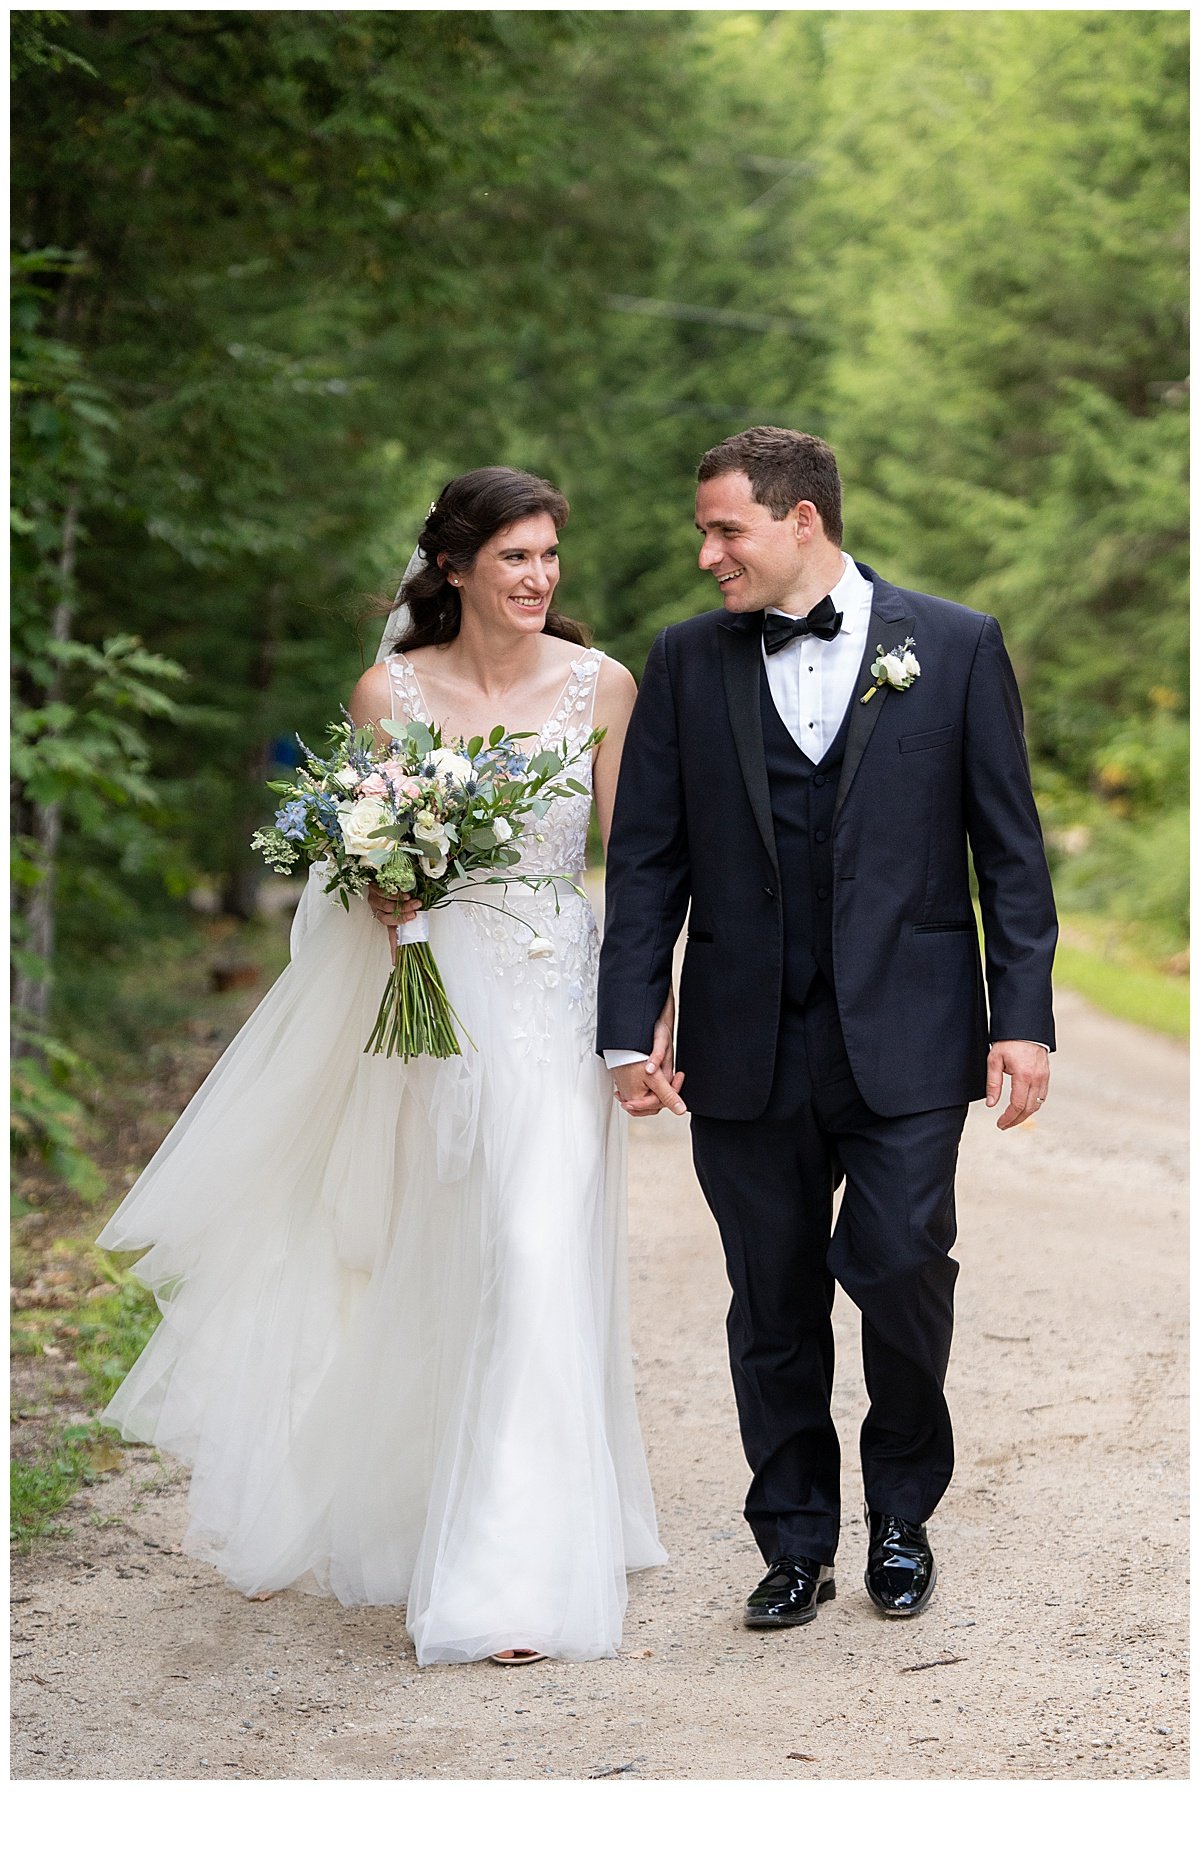 Granite Ridge Estate Wedding, Maine Barn Wedding Photographers, Two Adventurous Souls - 080622_0051.jpg